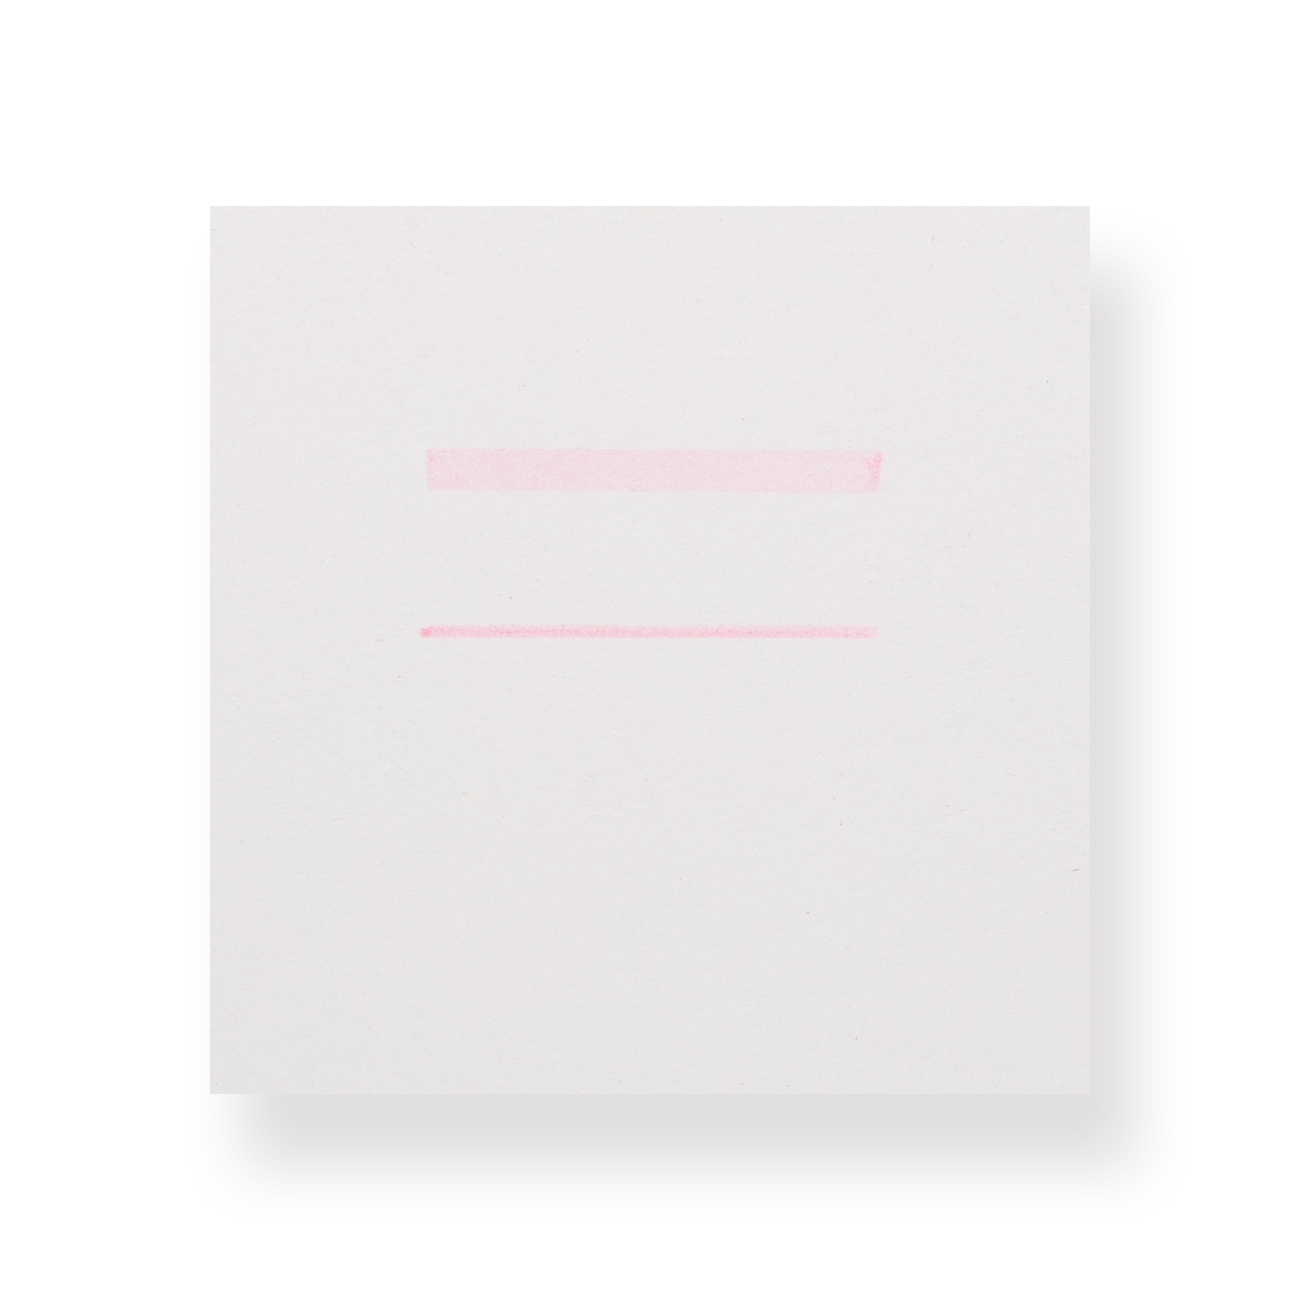 Zebra Mildliner Double-Sided Highlighter - Fine / Bold - Mild Baby Pink